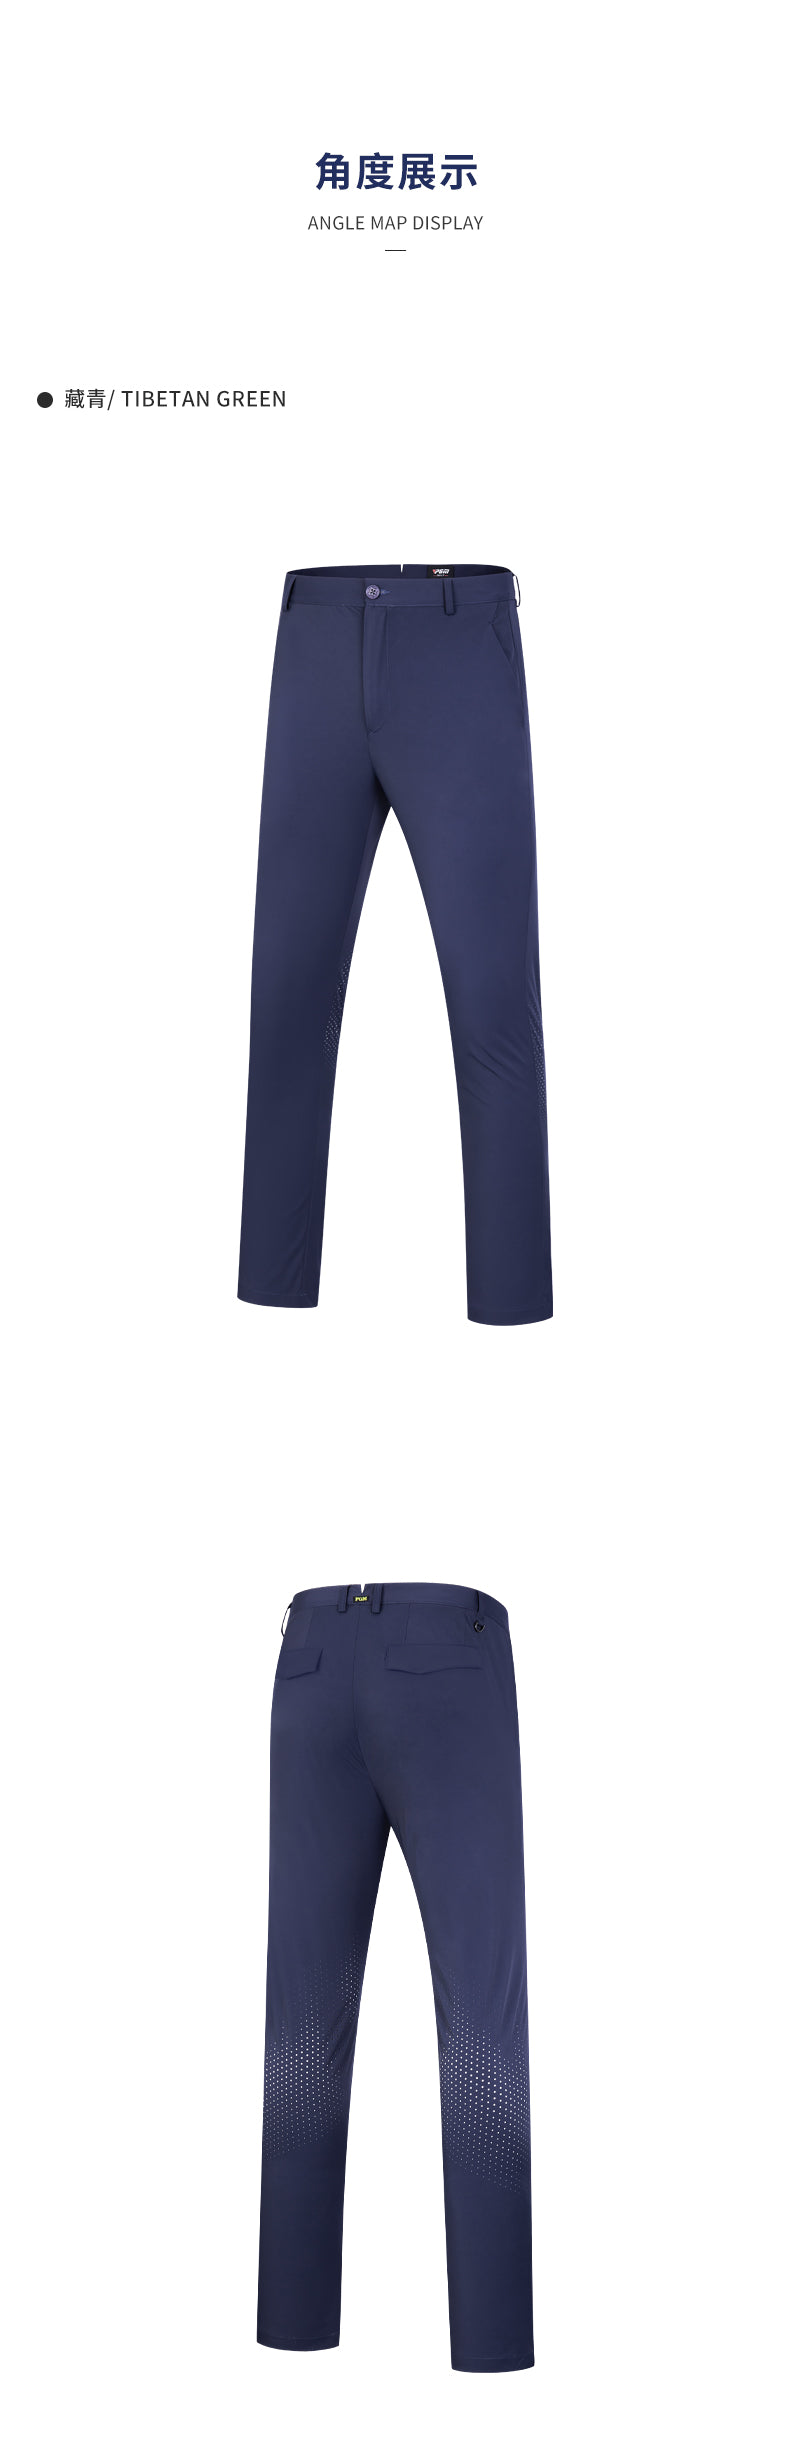 PGM KUZ131 custom polyester golf pants men stretch mesh breathable golf pants